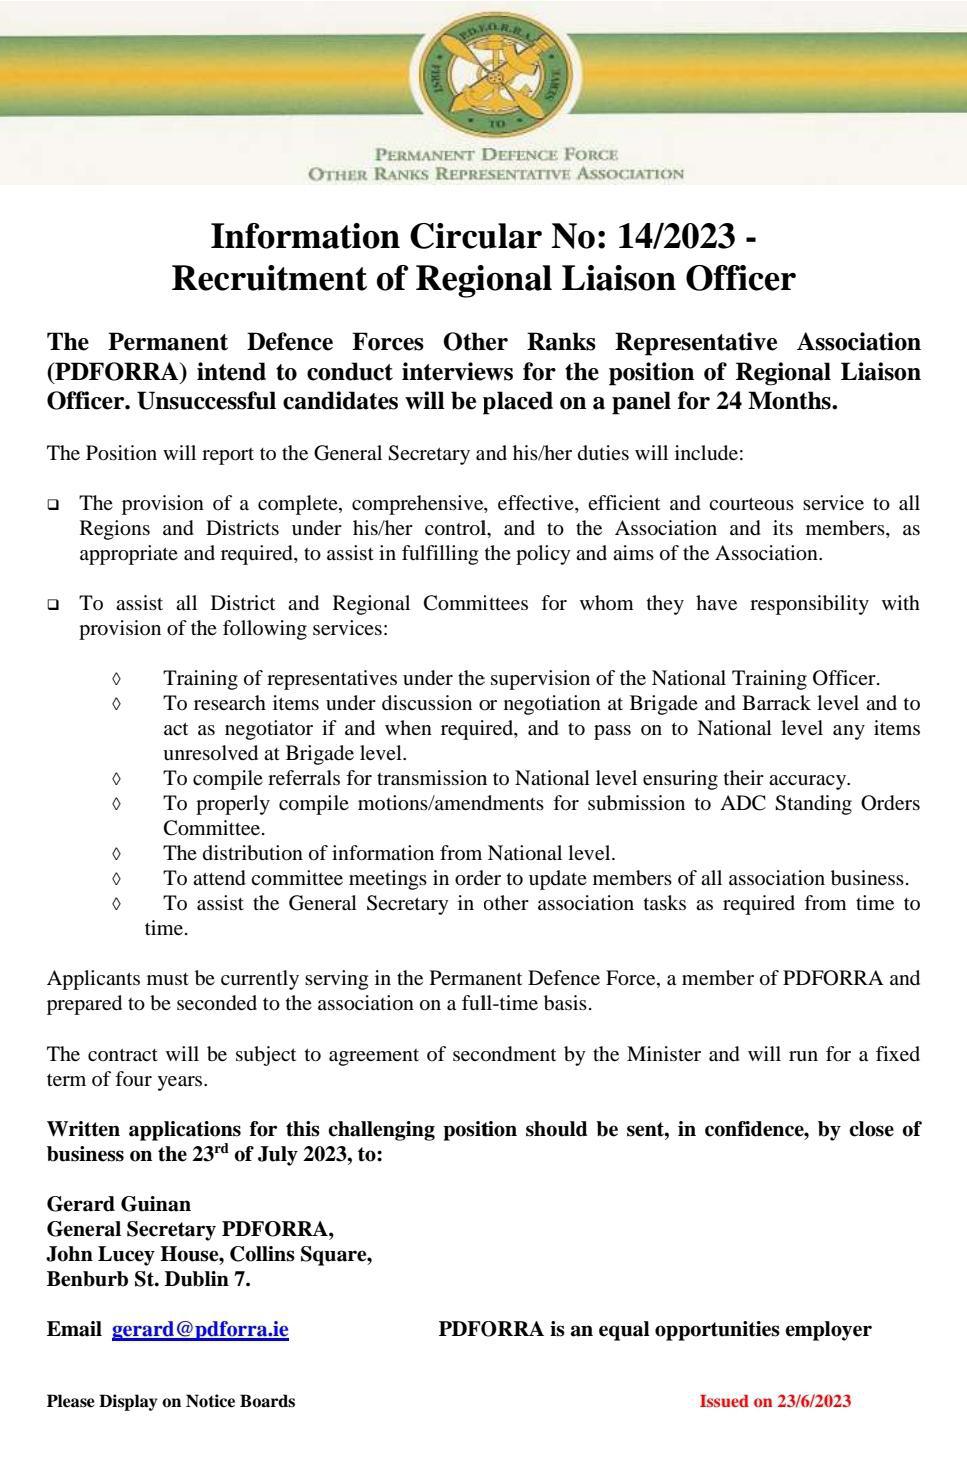 Information Circular No 14 of 23 - Recruitment of Regional Liaison Officer PDFORRA